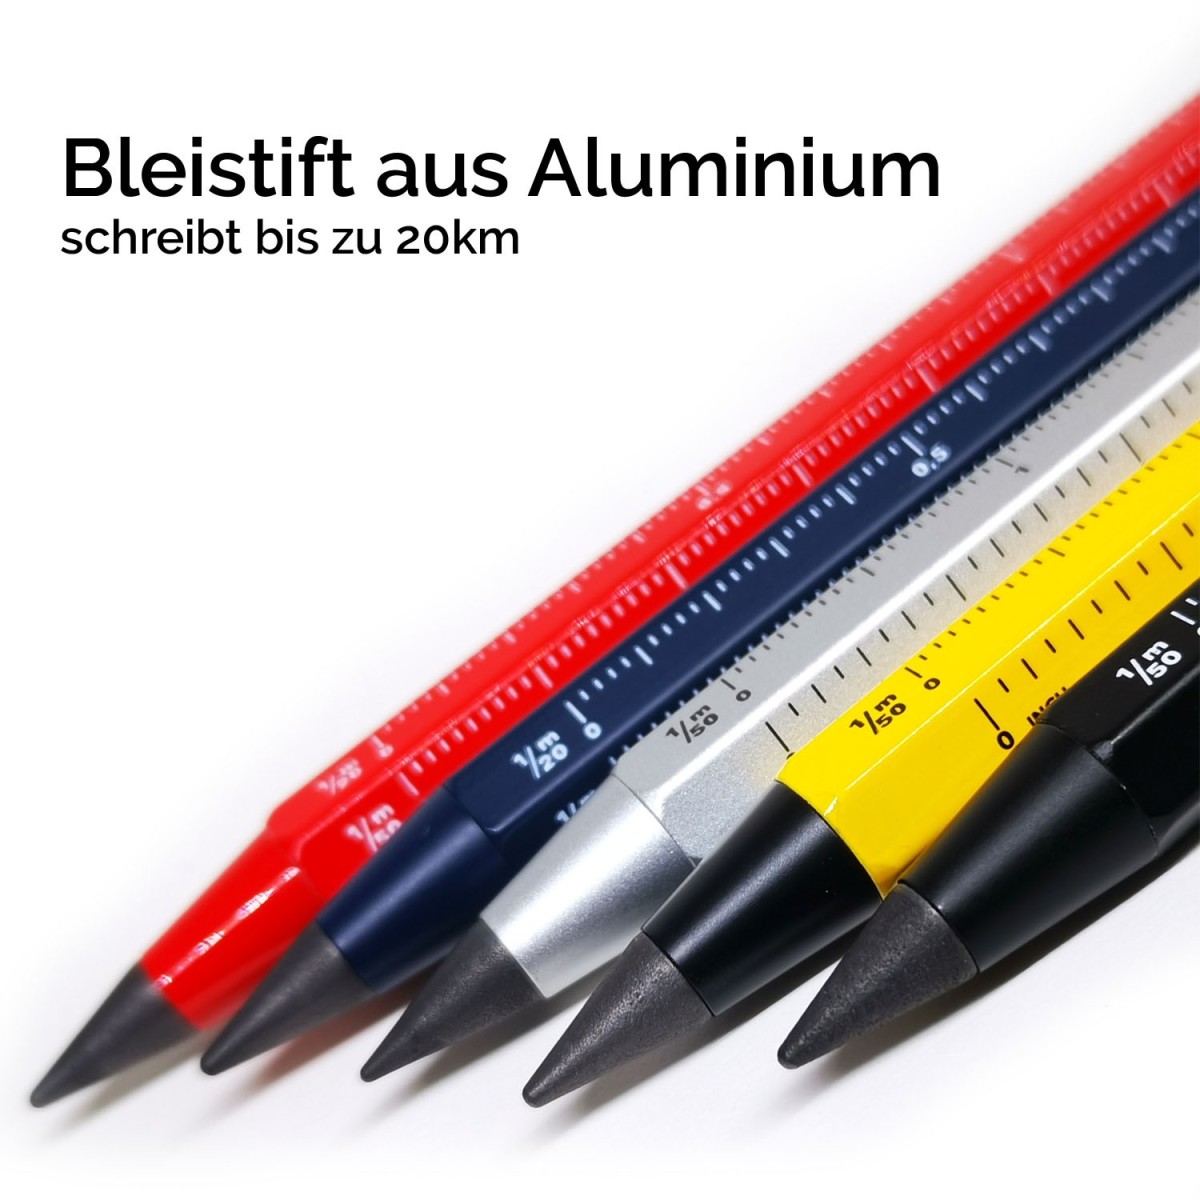 Solid aluminium pencil with laser engraving.